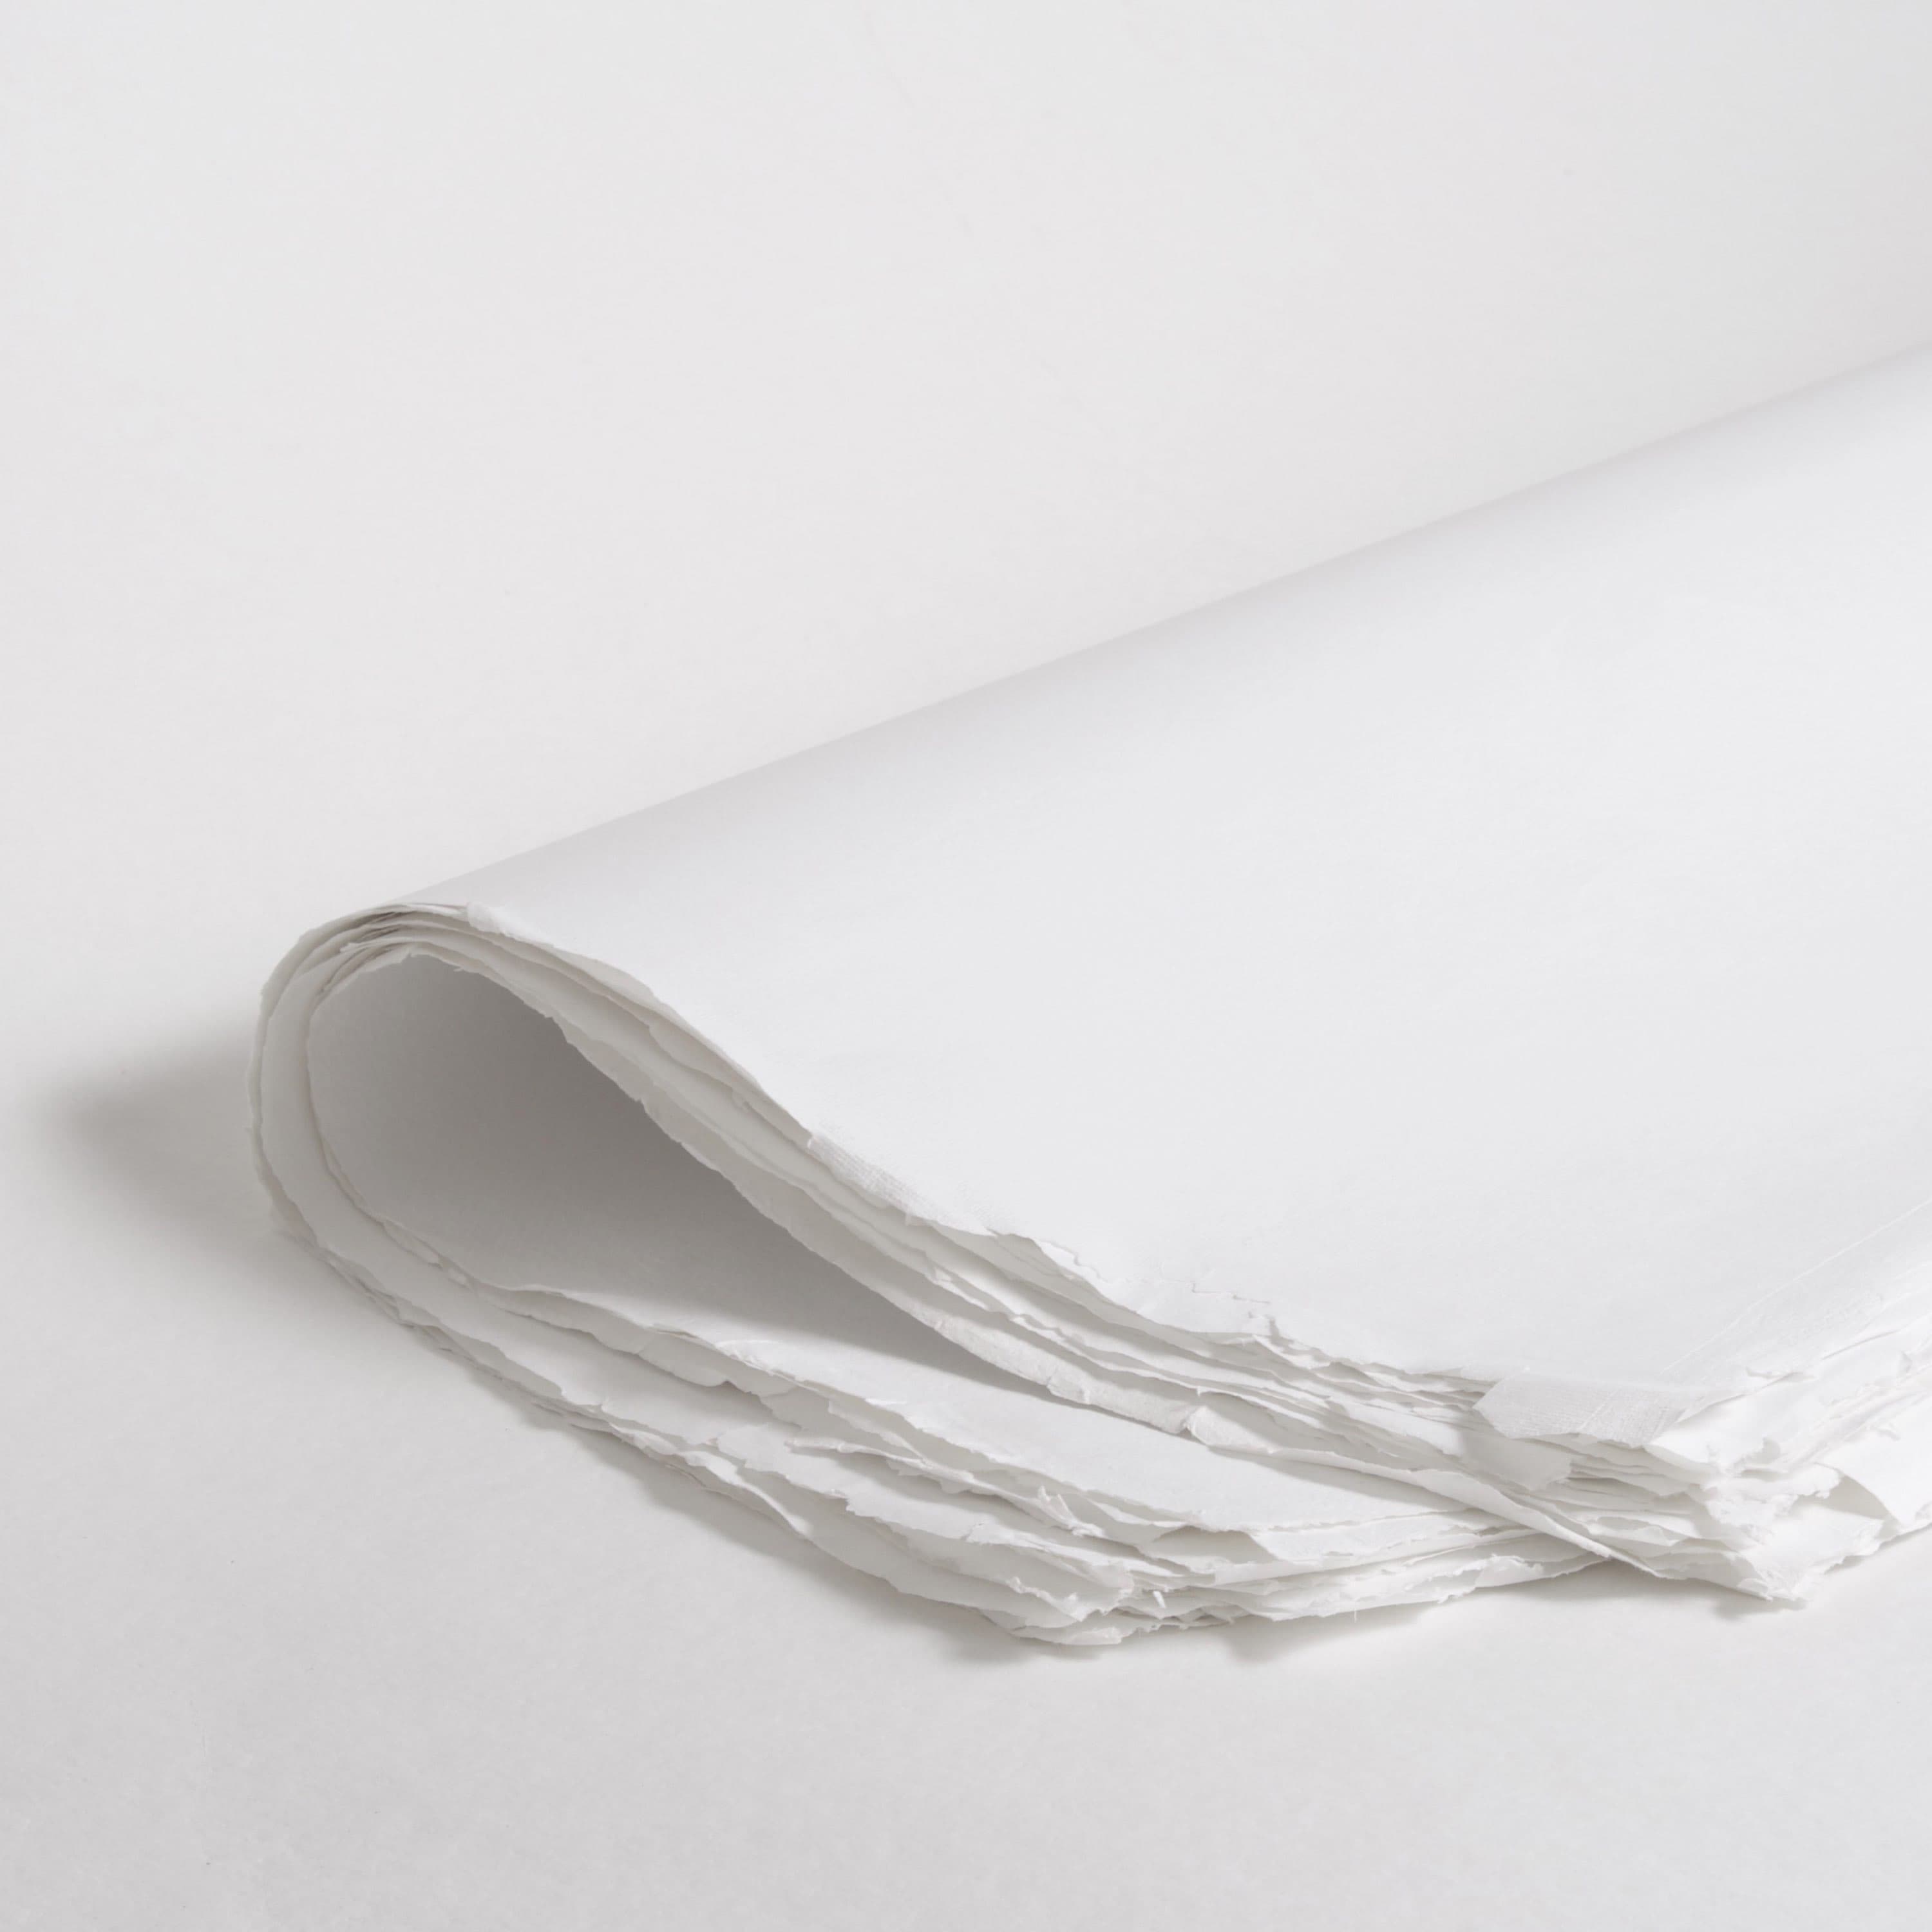 White, Imperial Plus, 300 gsm – Deckle edge paper – Indian Cotton Paper Co.